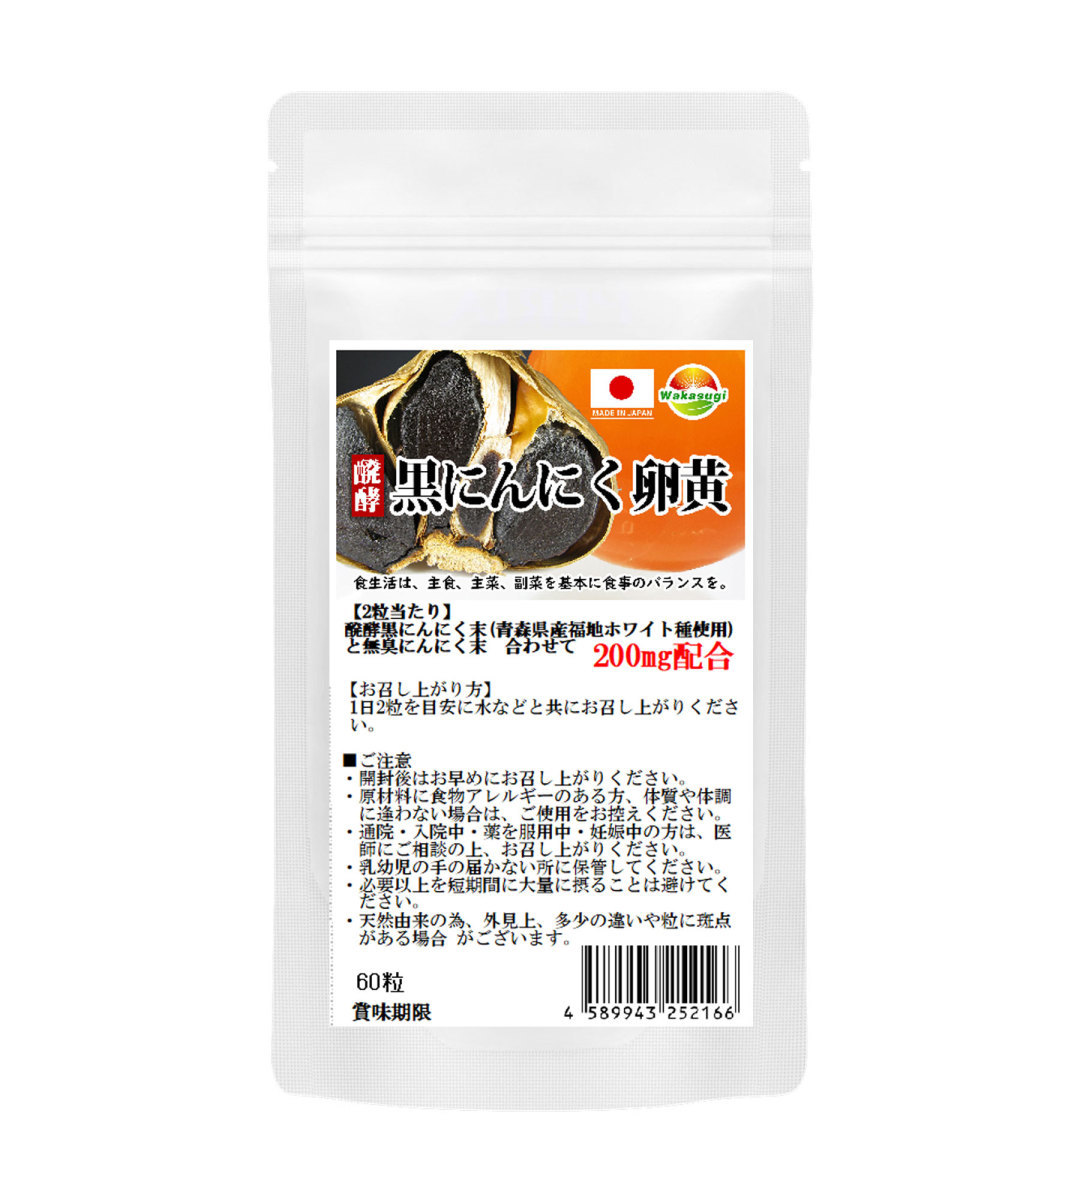 .. black garlic egg yolk supplement 60 bead 3 sack set total 150 bead approximately 3. month minute Aomori prefecture production Fukuchi white kind use pills . type 